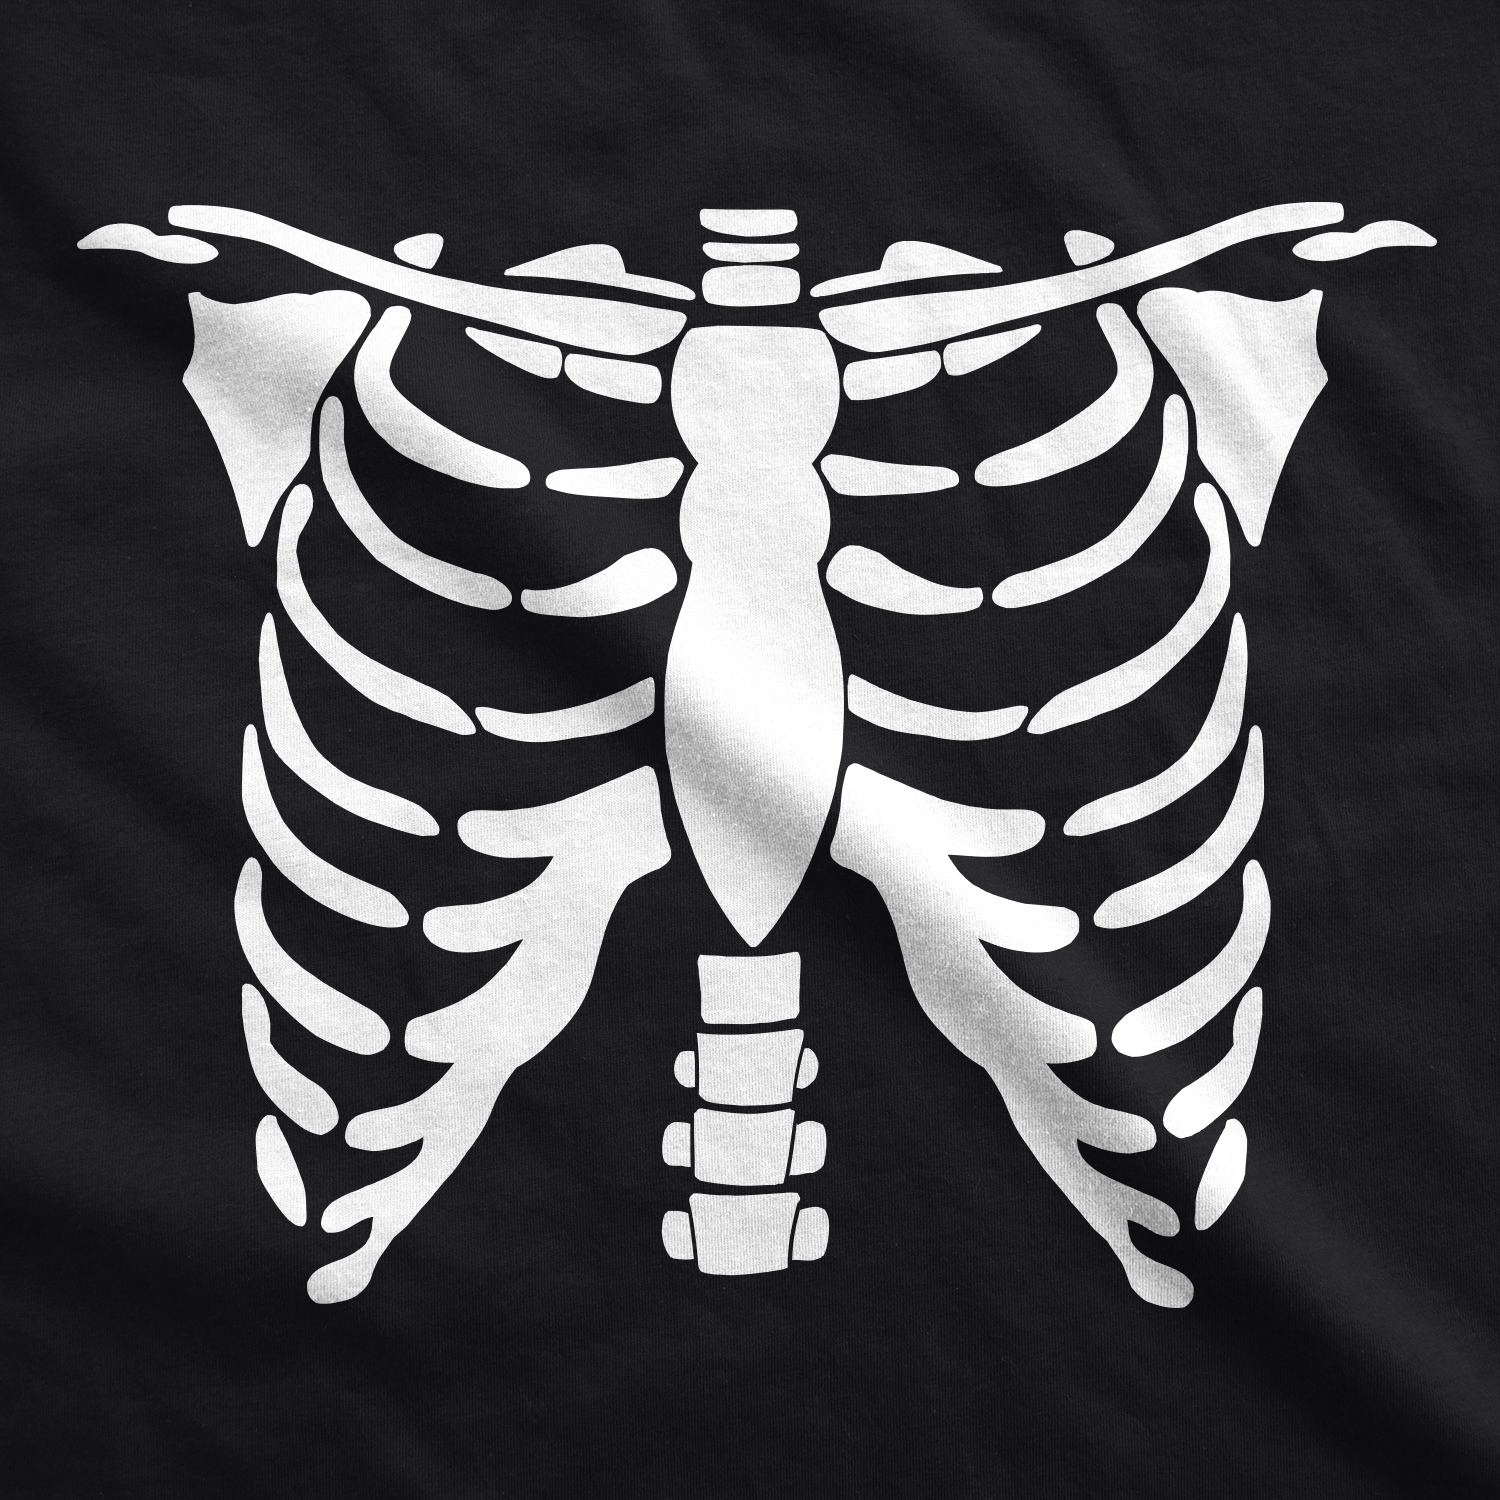 Mens White Skeleton Rib Cage Funny Halloween Costume T shirt (Black) - 4XL  Graphic Tees 